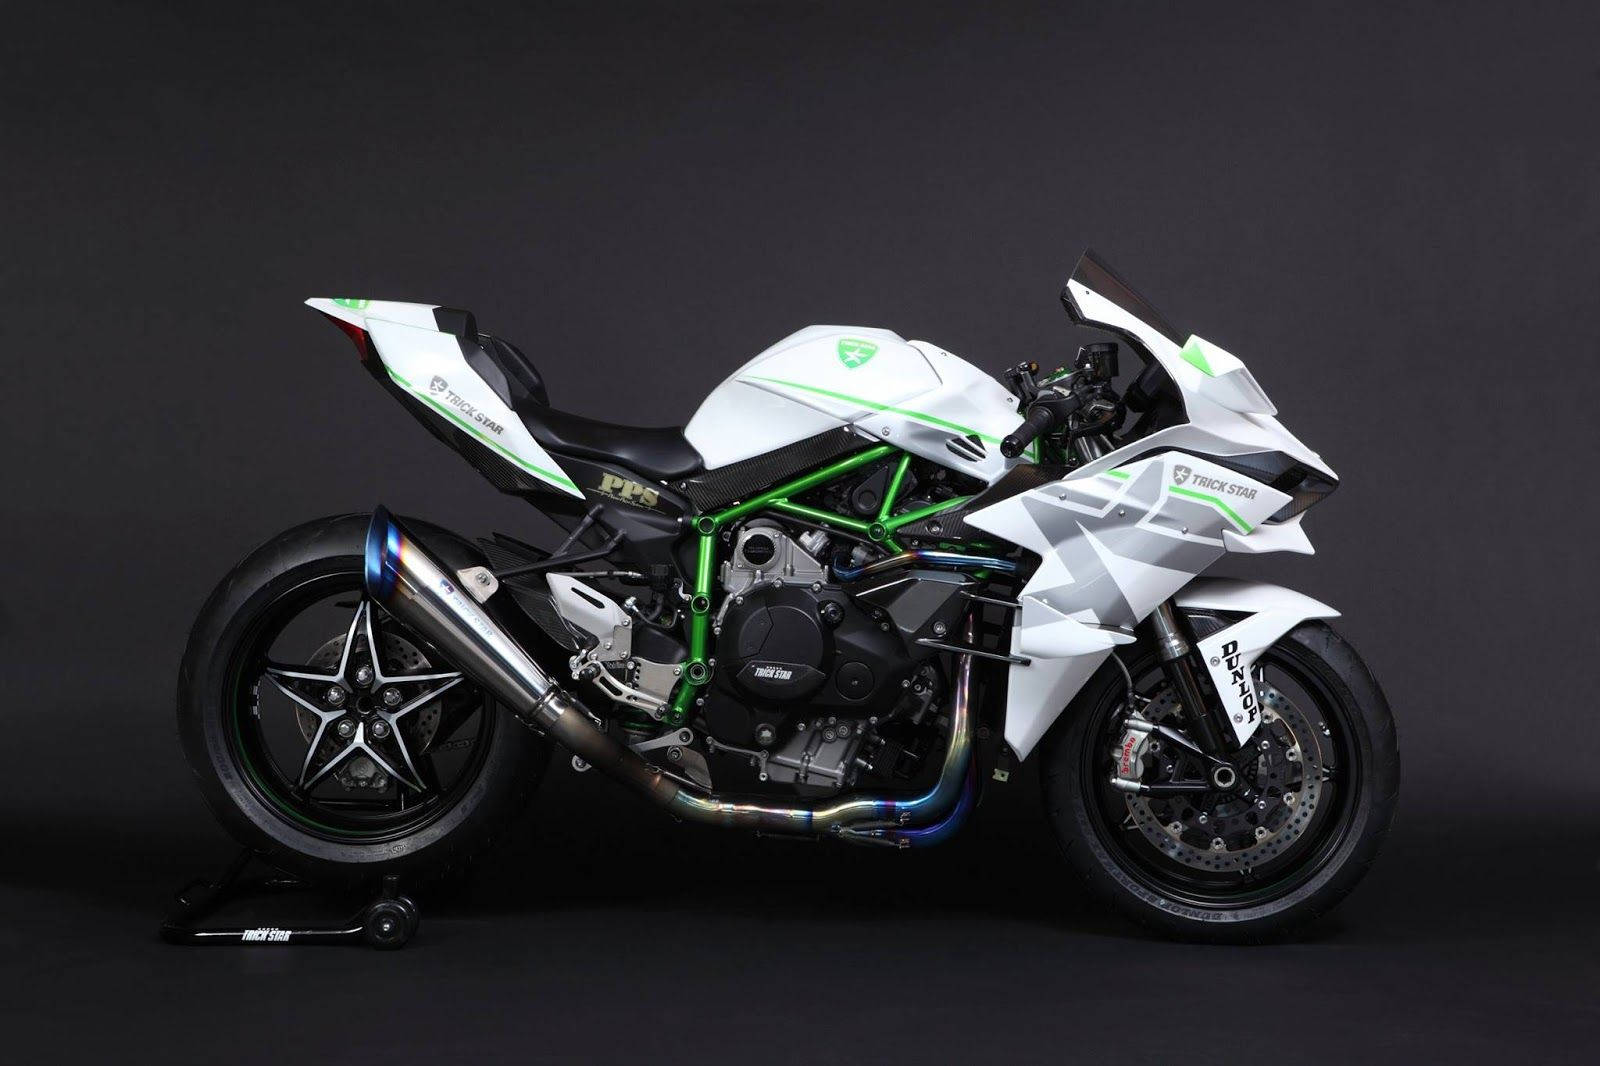 Exhilarating Power - The White and Black Kawasaki H2R Wallpaper